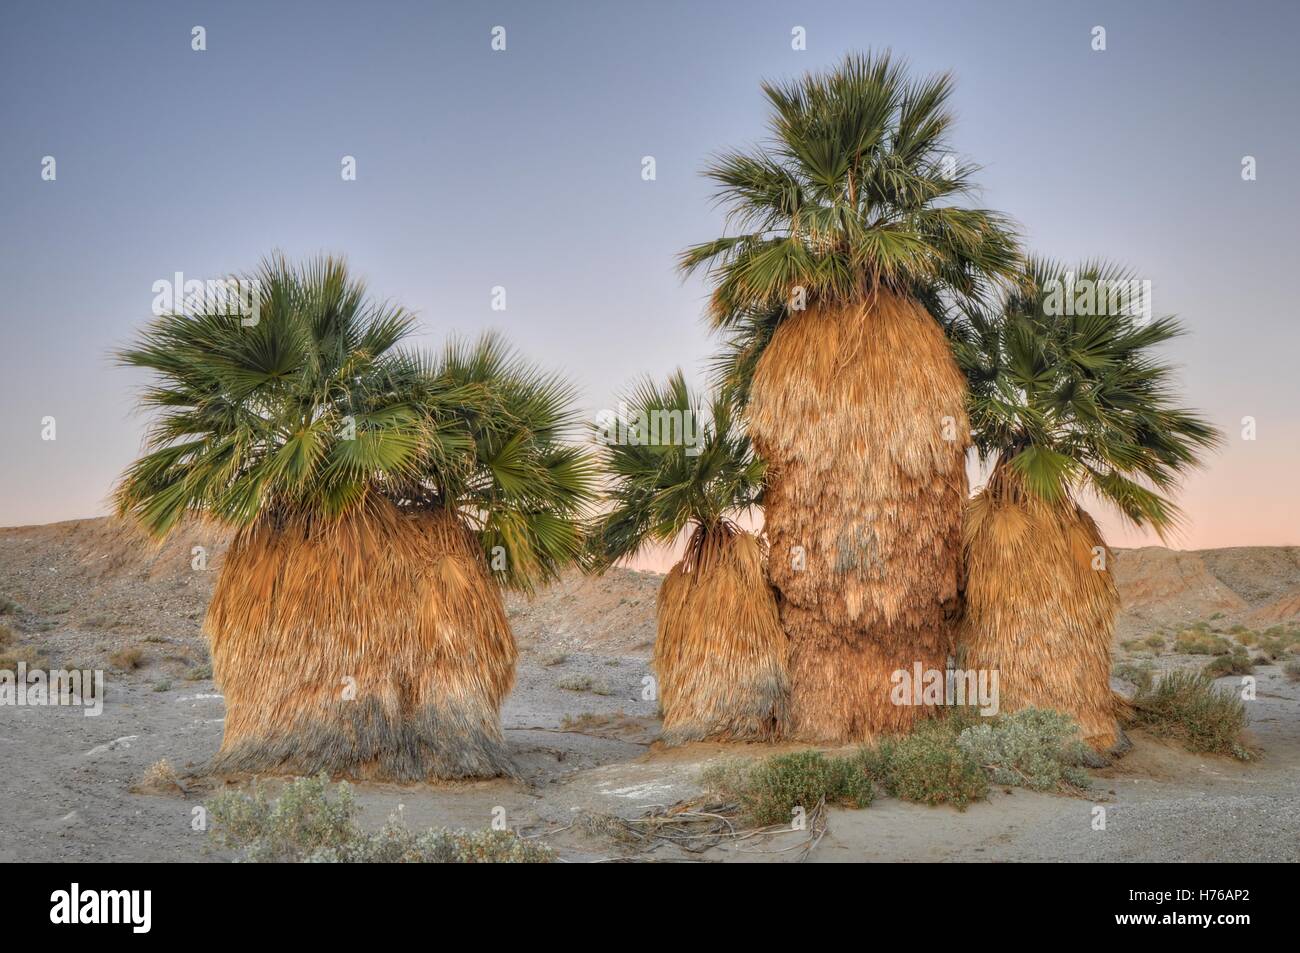 Palm trees, Anza Borrego Desert State Park, California, United States Stock Photo